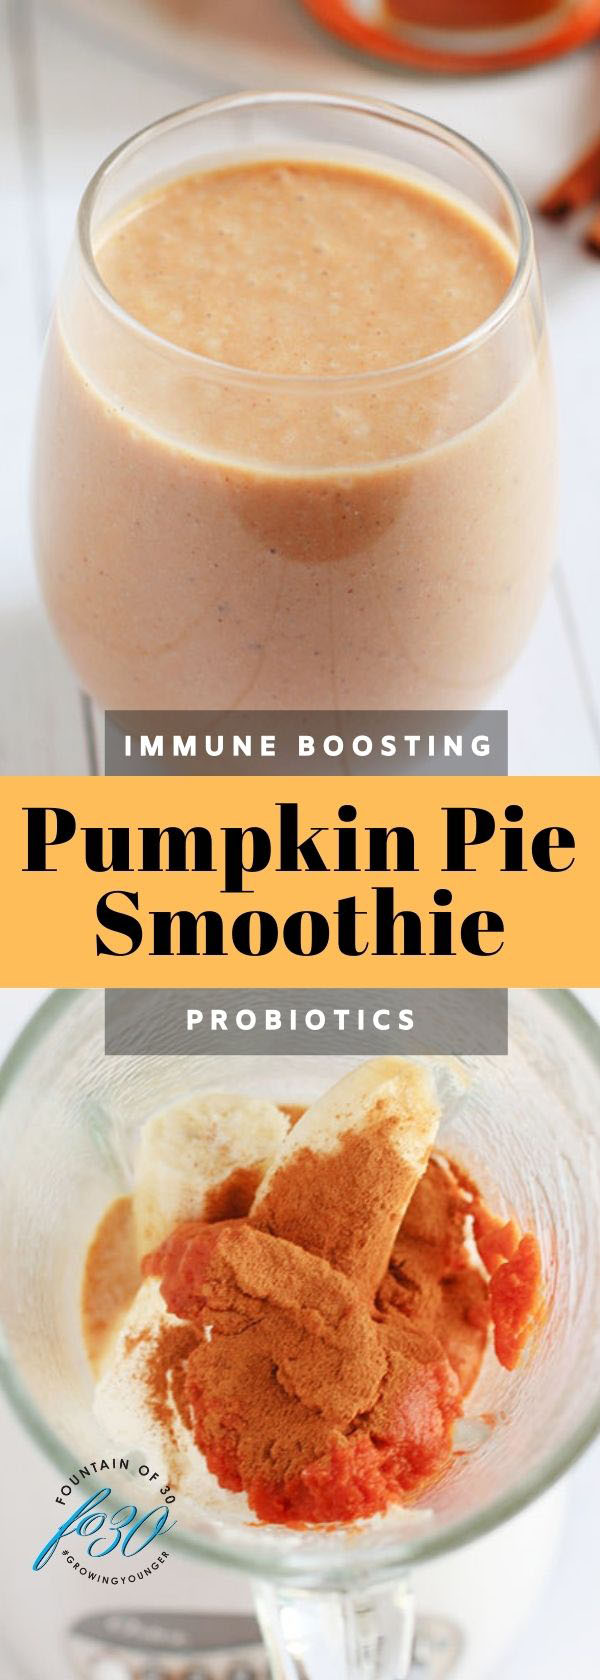 immune boosting pumpkin pie smoothie fountainof30